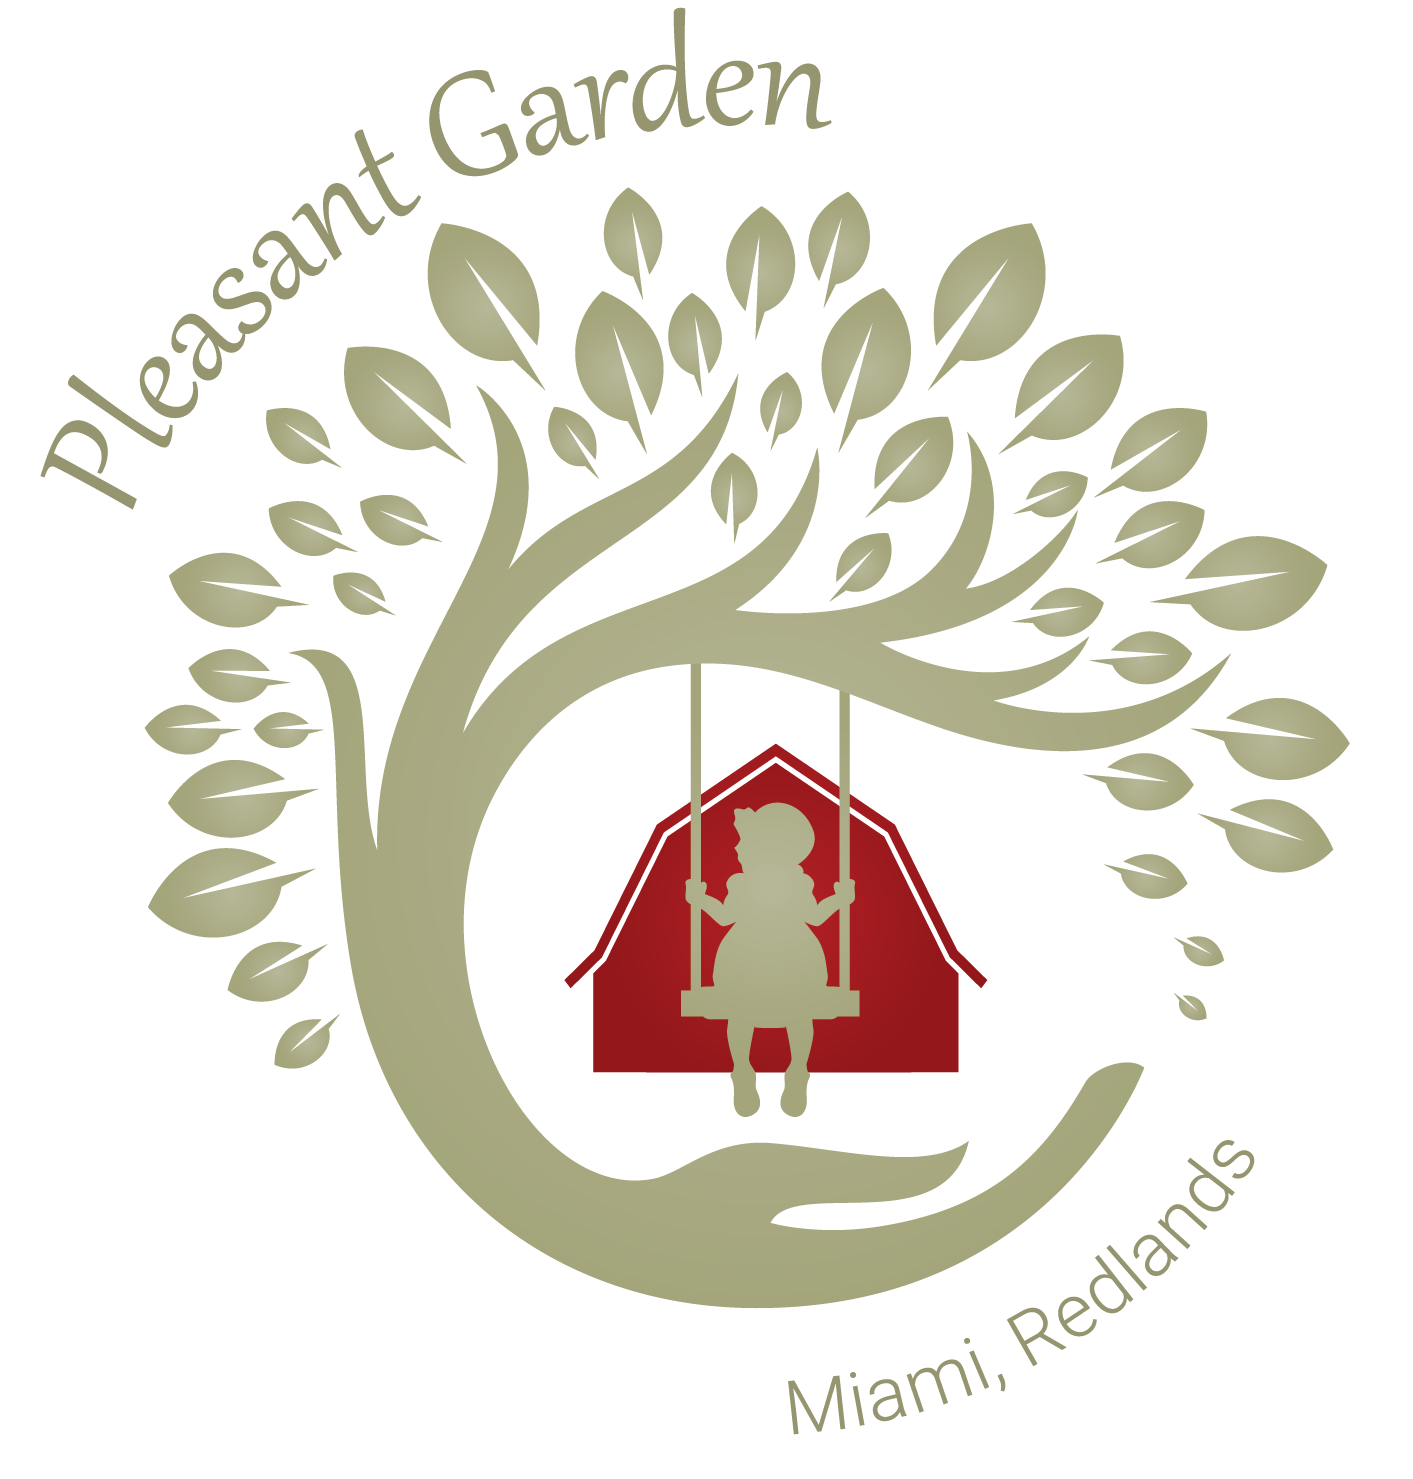 The Pleasant Garden logo